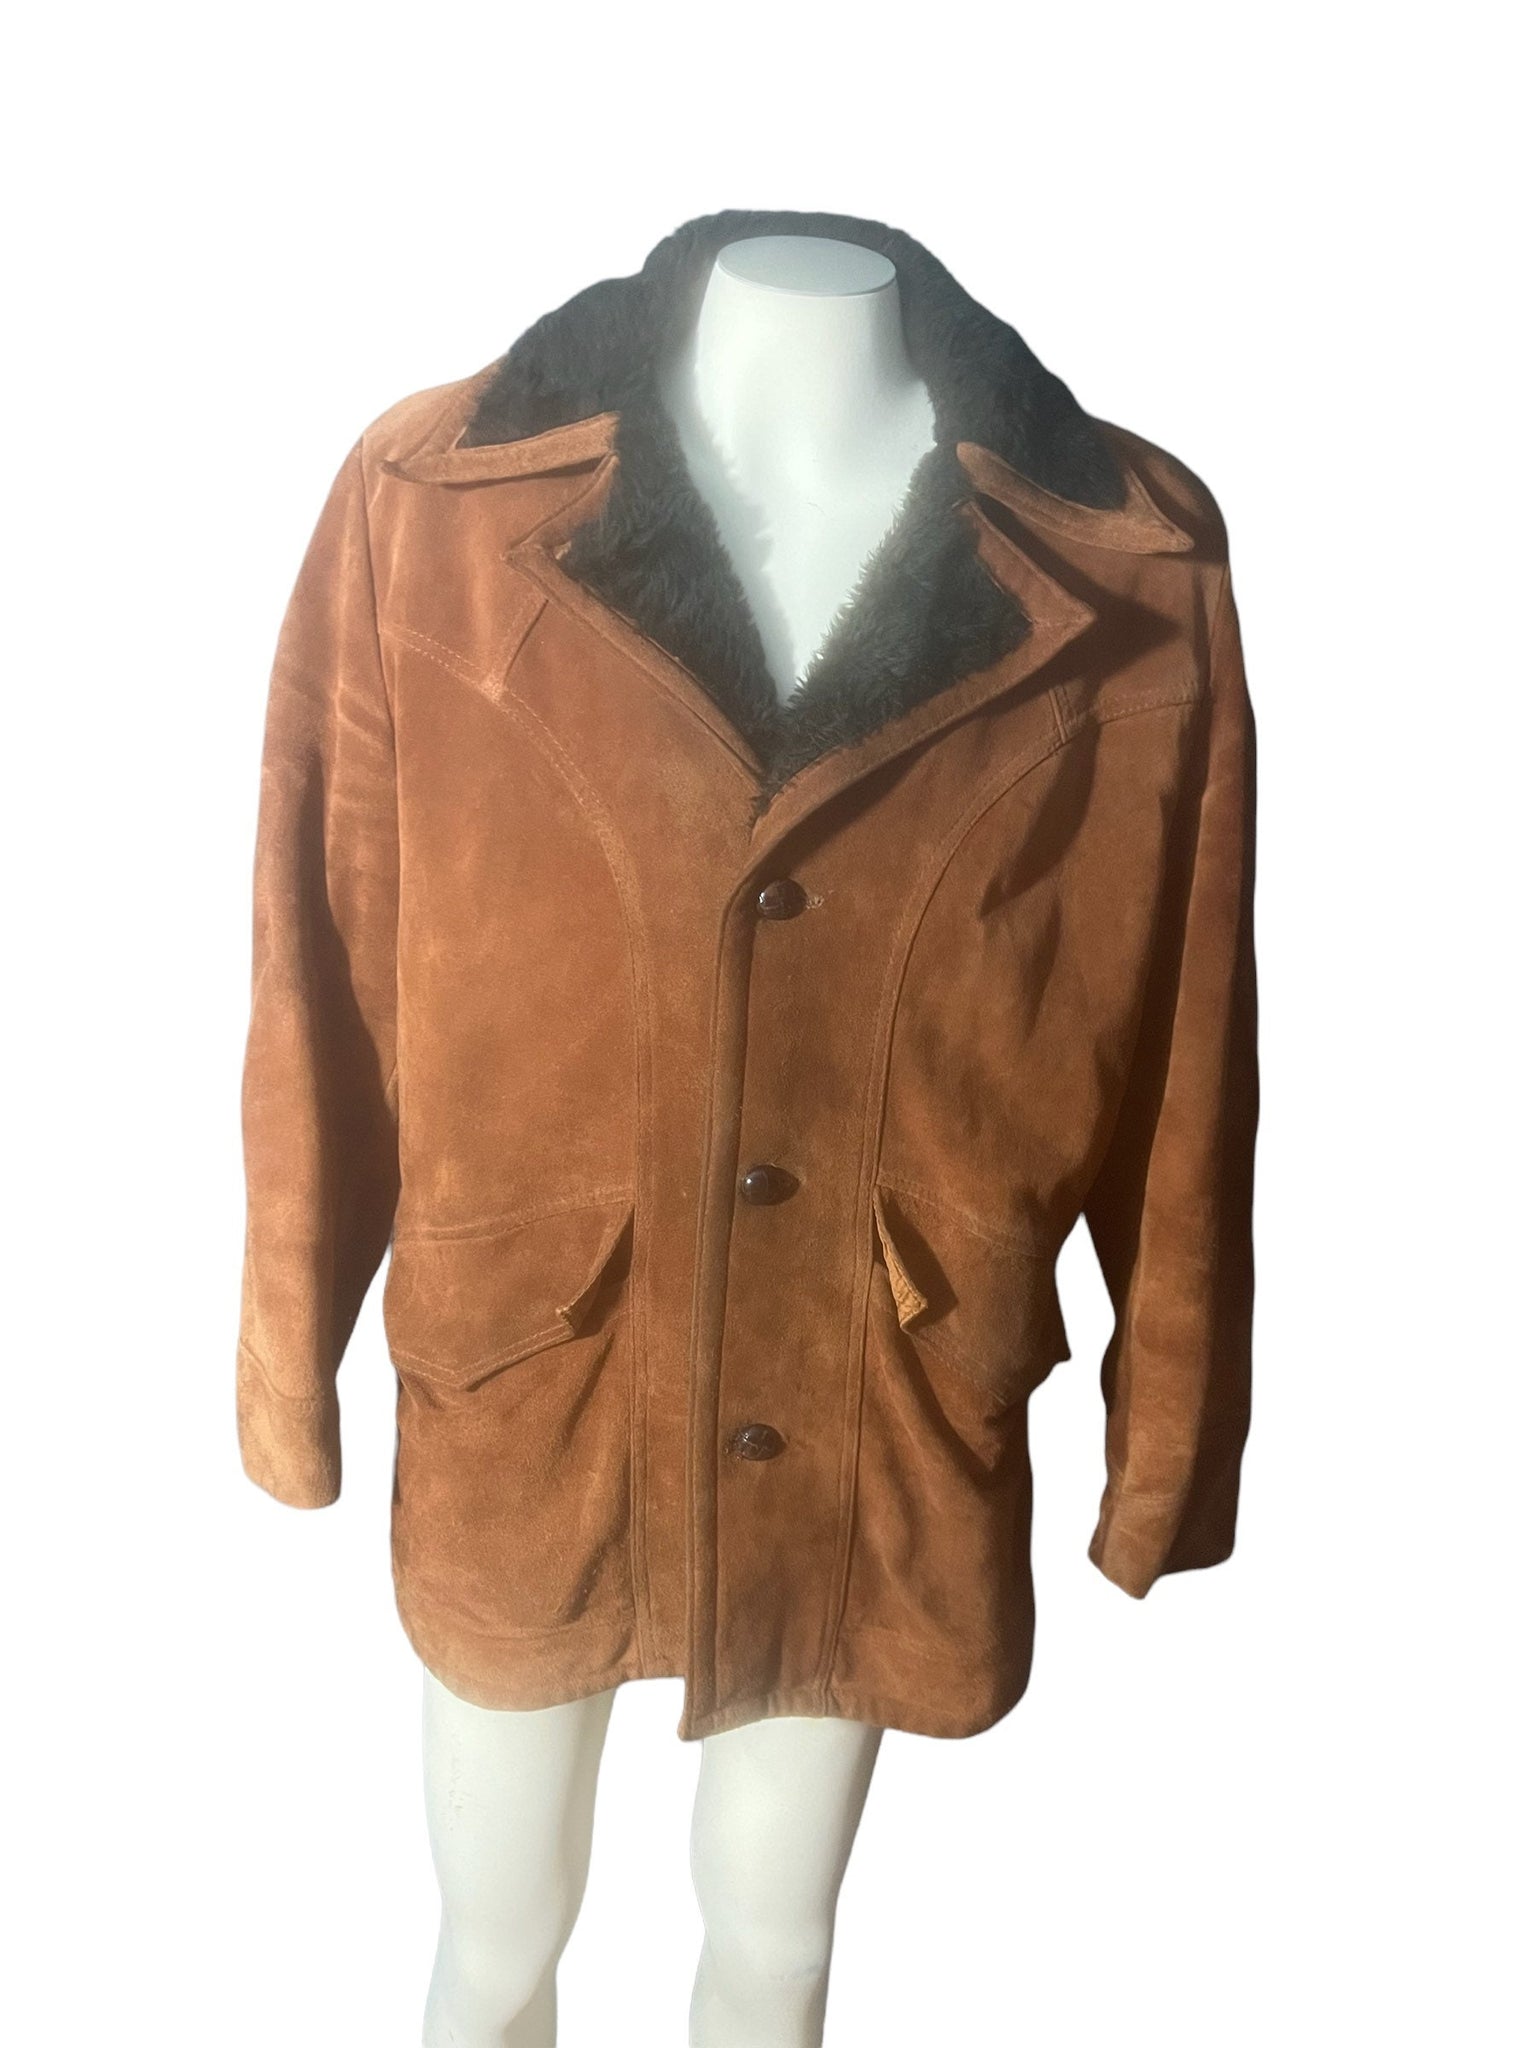 Vintage 70's Sears men's leather jacket 42